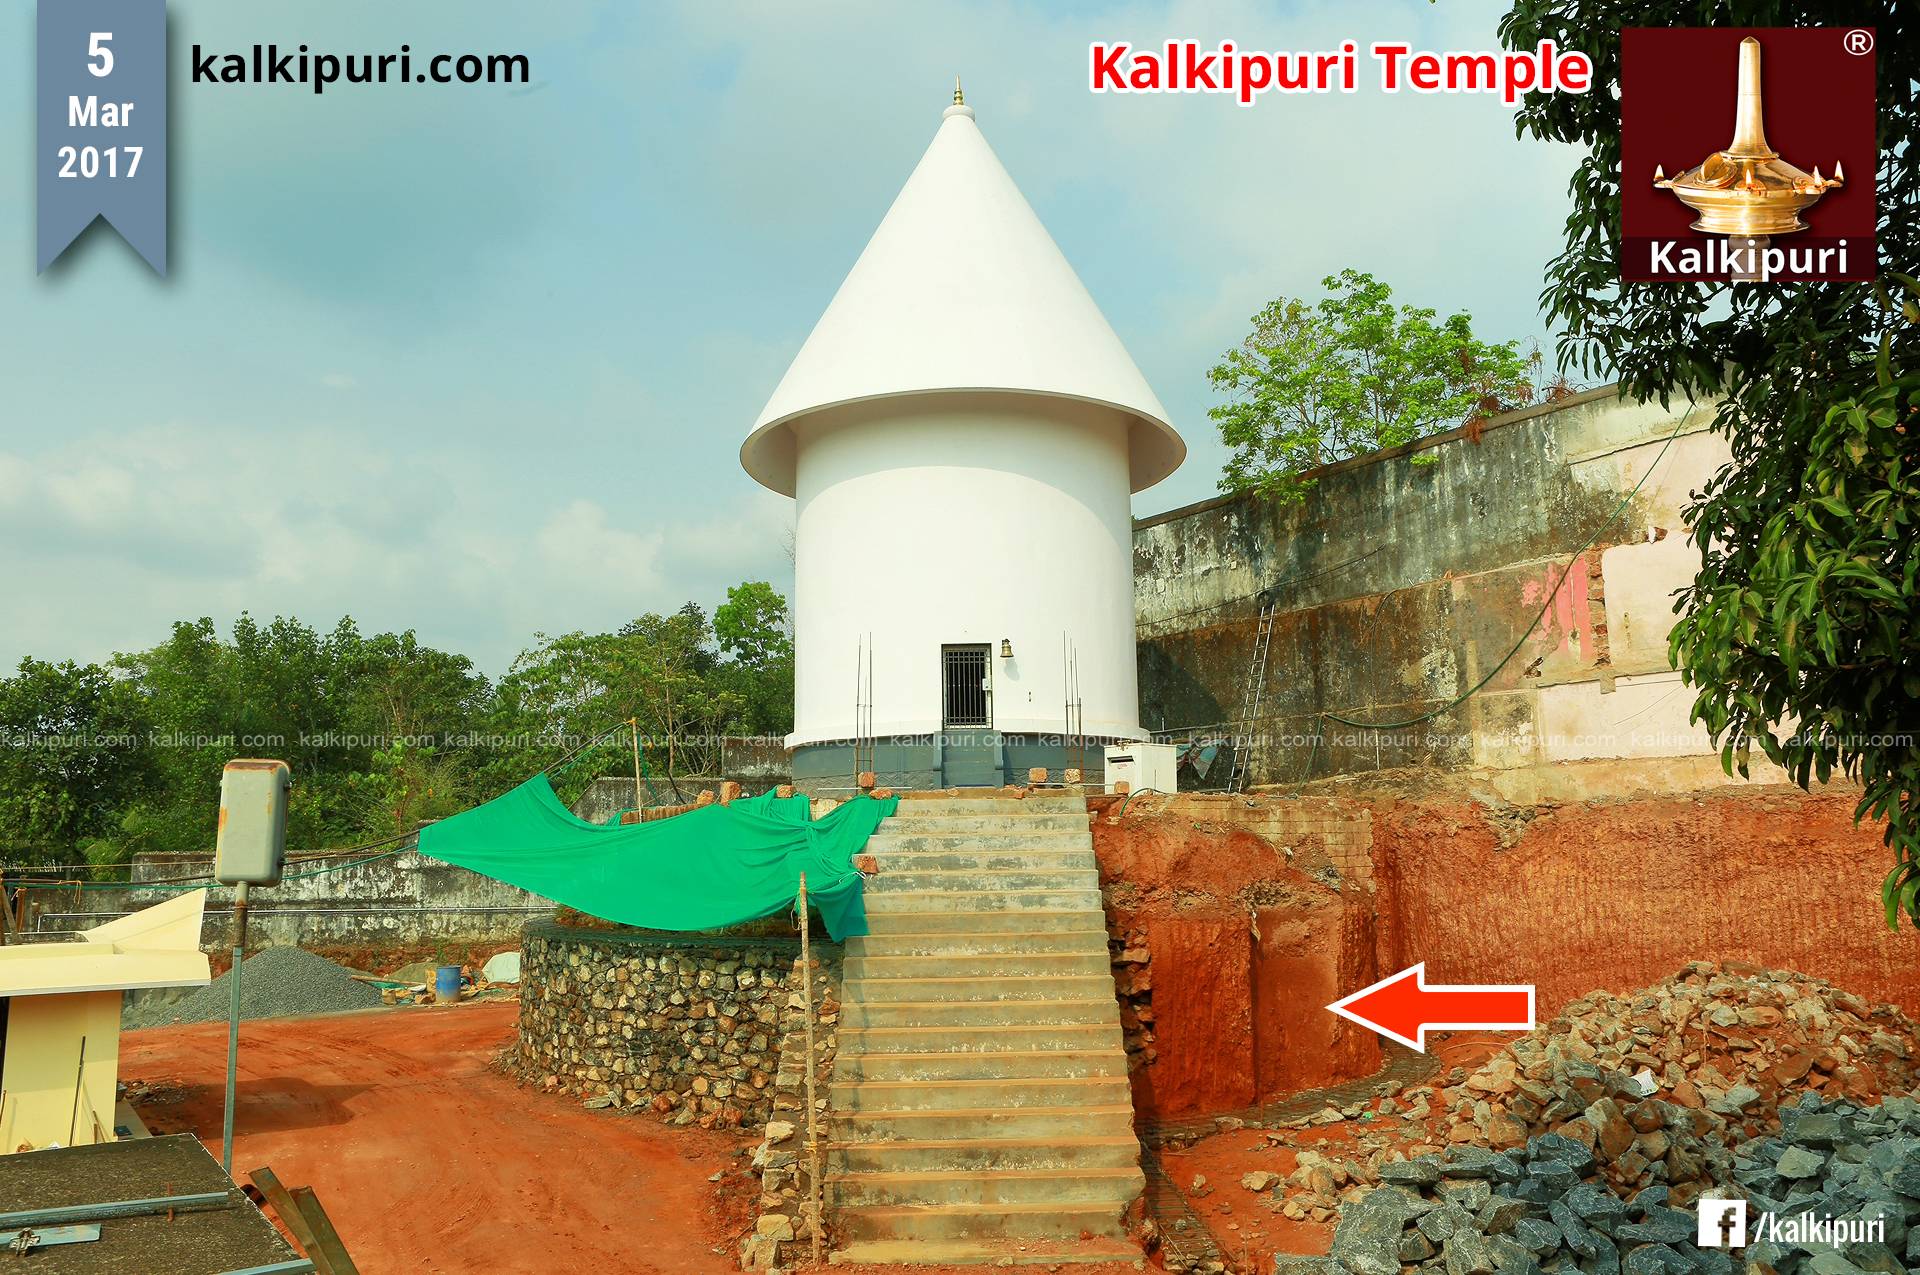 Kalkipuri Temple on 5 Mar 2017-1